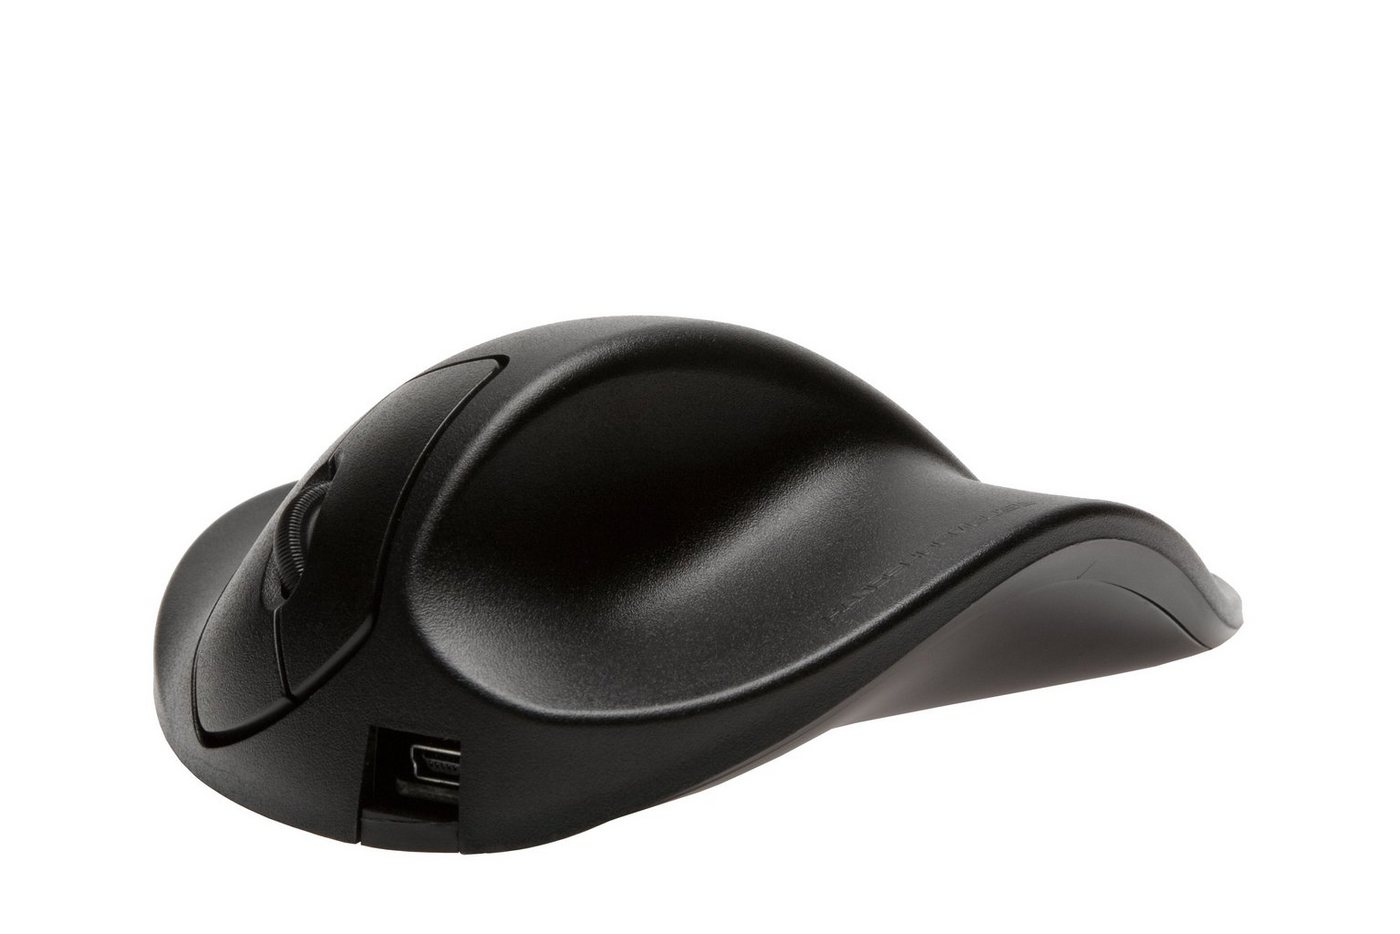 HANDSHOEMOUSE S2WB-LC ergonomische Maus von HANDSHOEMOUSE